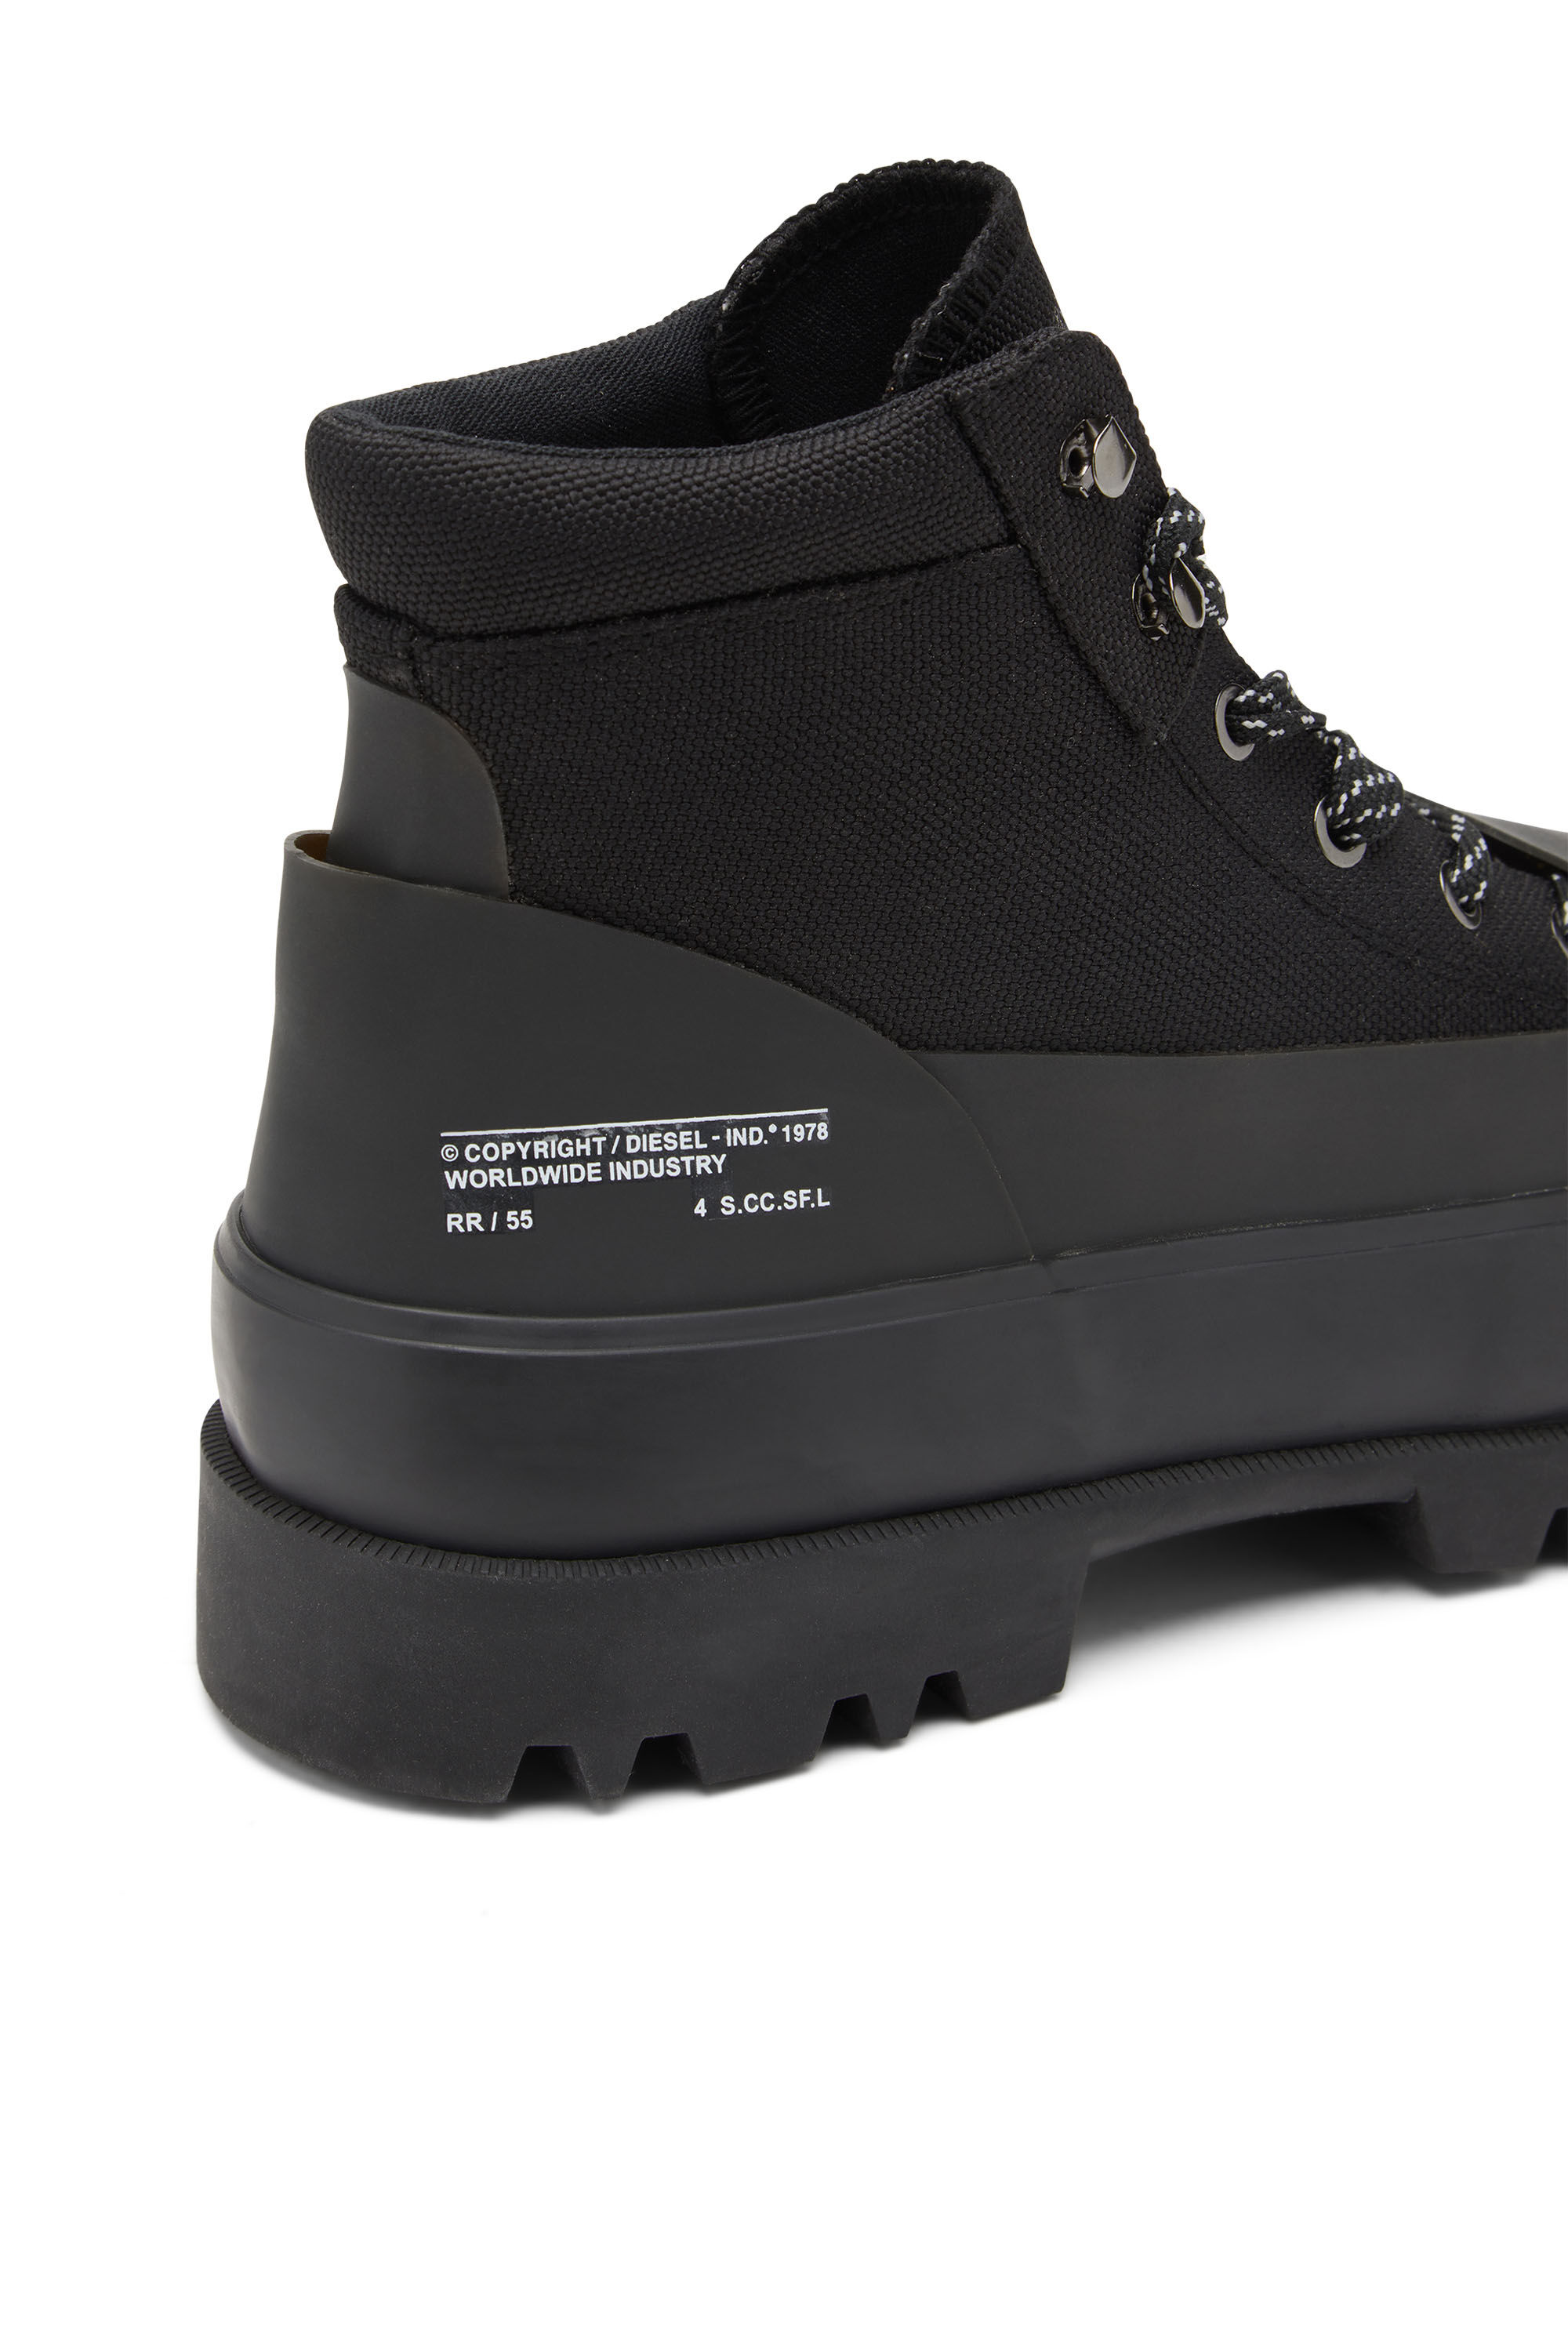 D-HIKO BT X Unisex: Ankle boots in ballistic nylon | Diesel